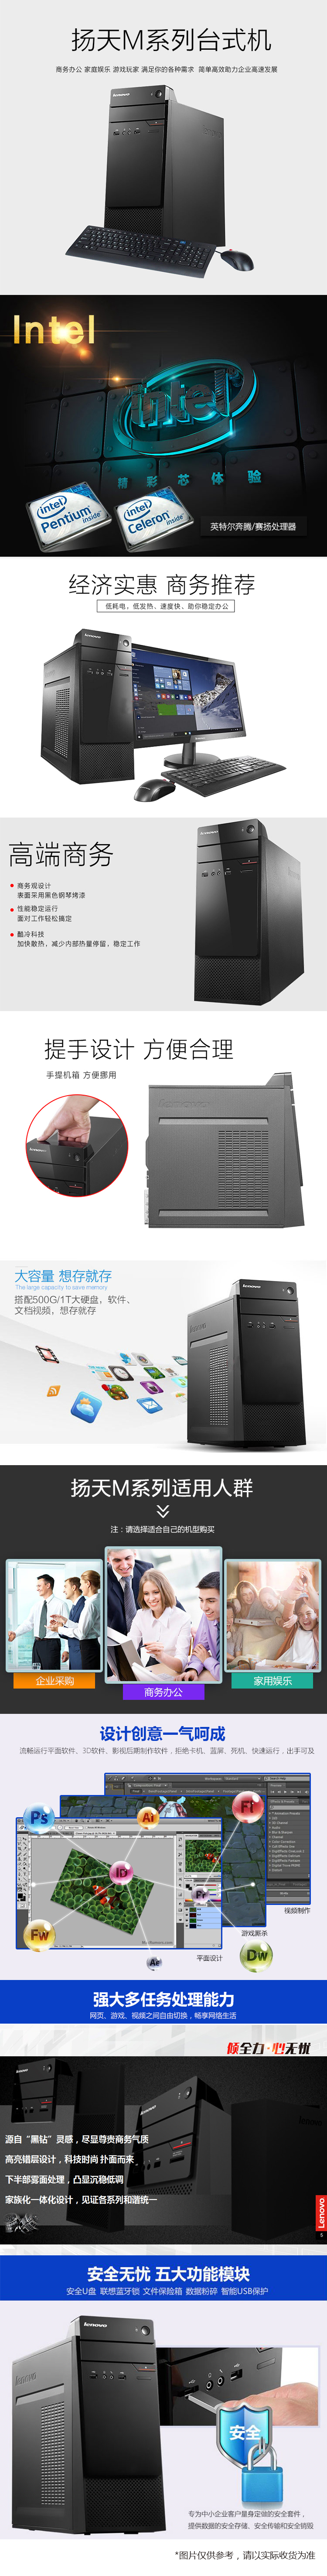 联想(Lenovo)扬天商用M6201c台式电脑19.5WLED（I3-6100 4GB 1T 2G独 DVD W10)